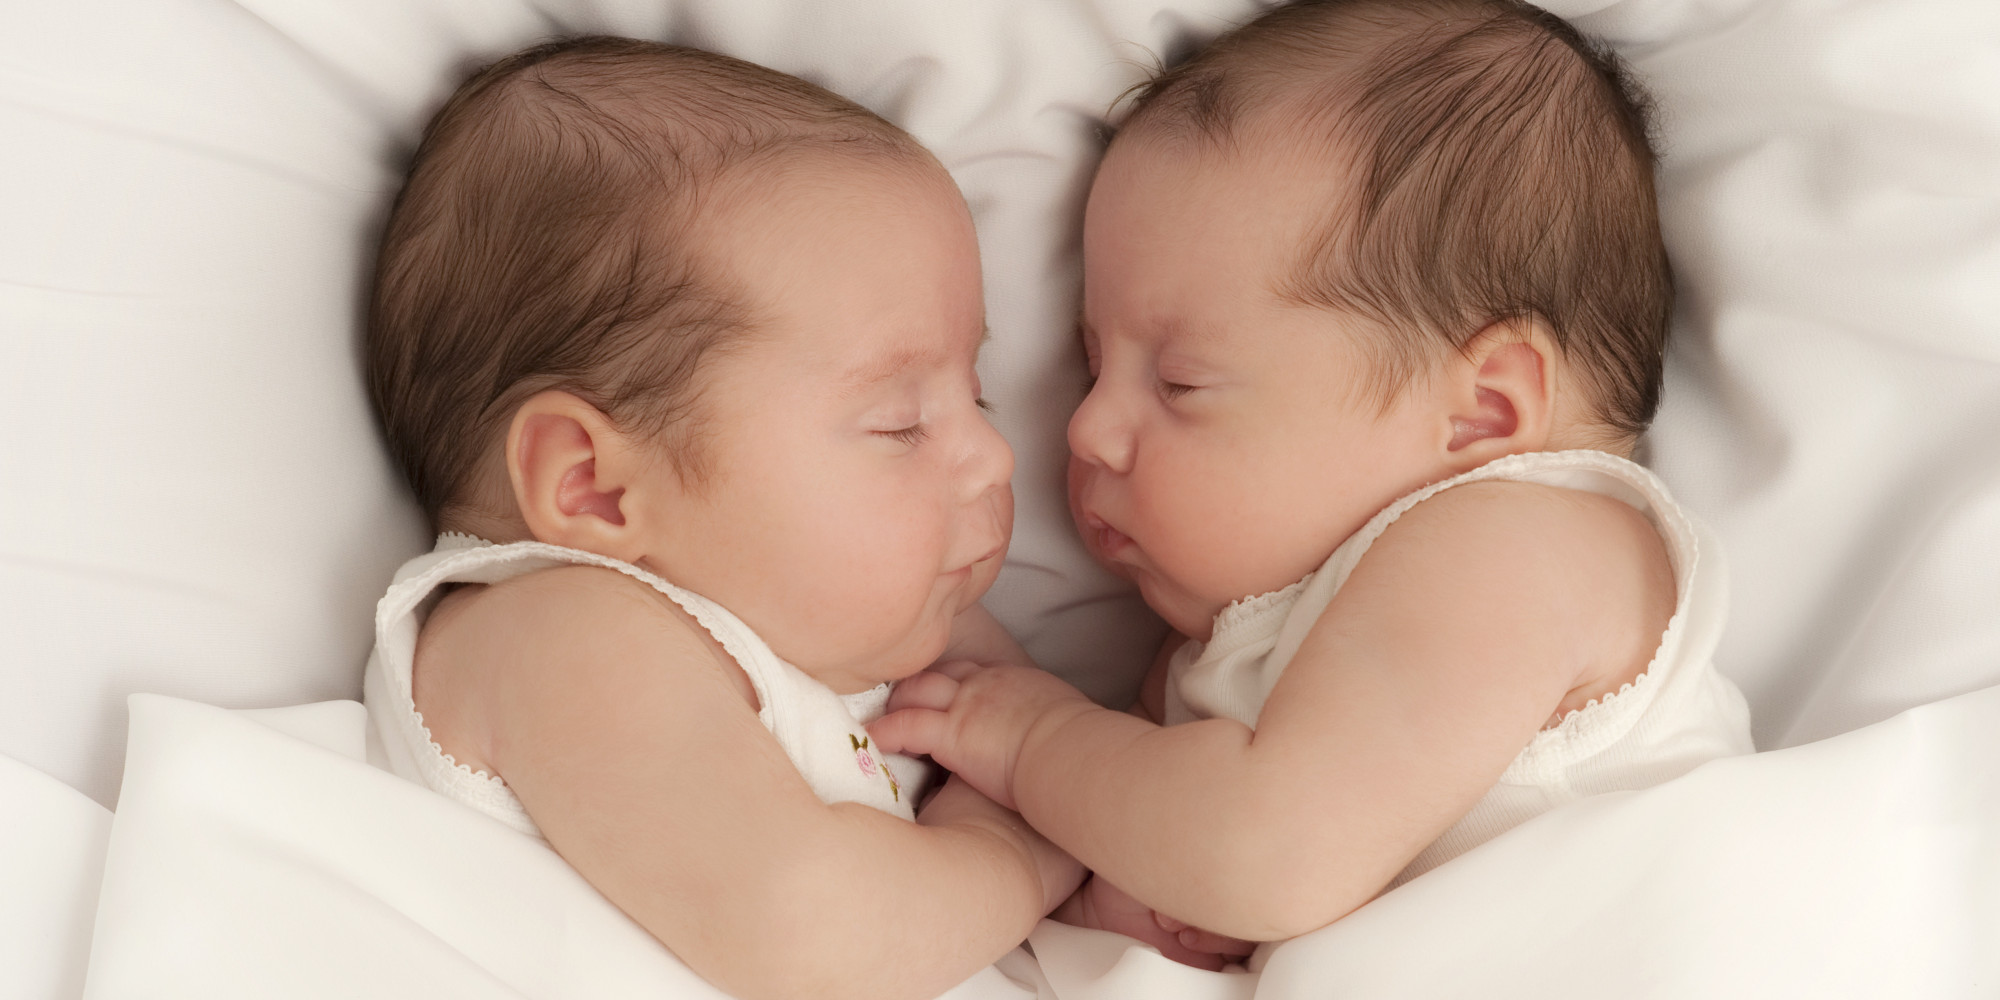 Newborn twins sleeping